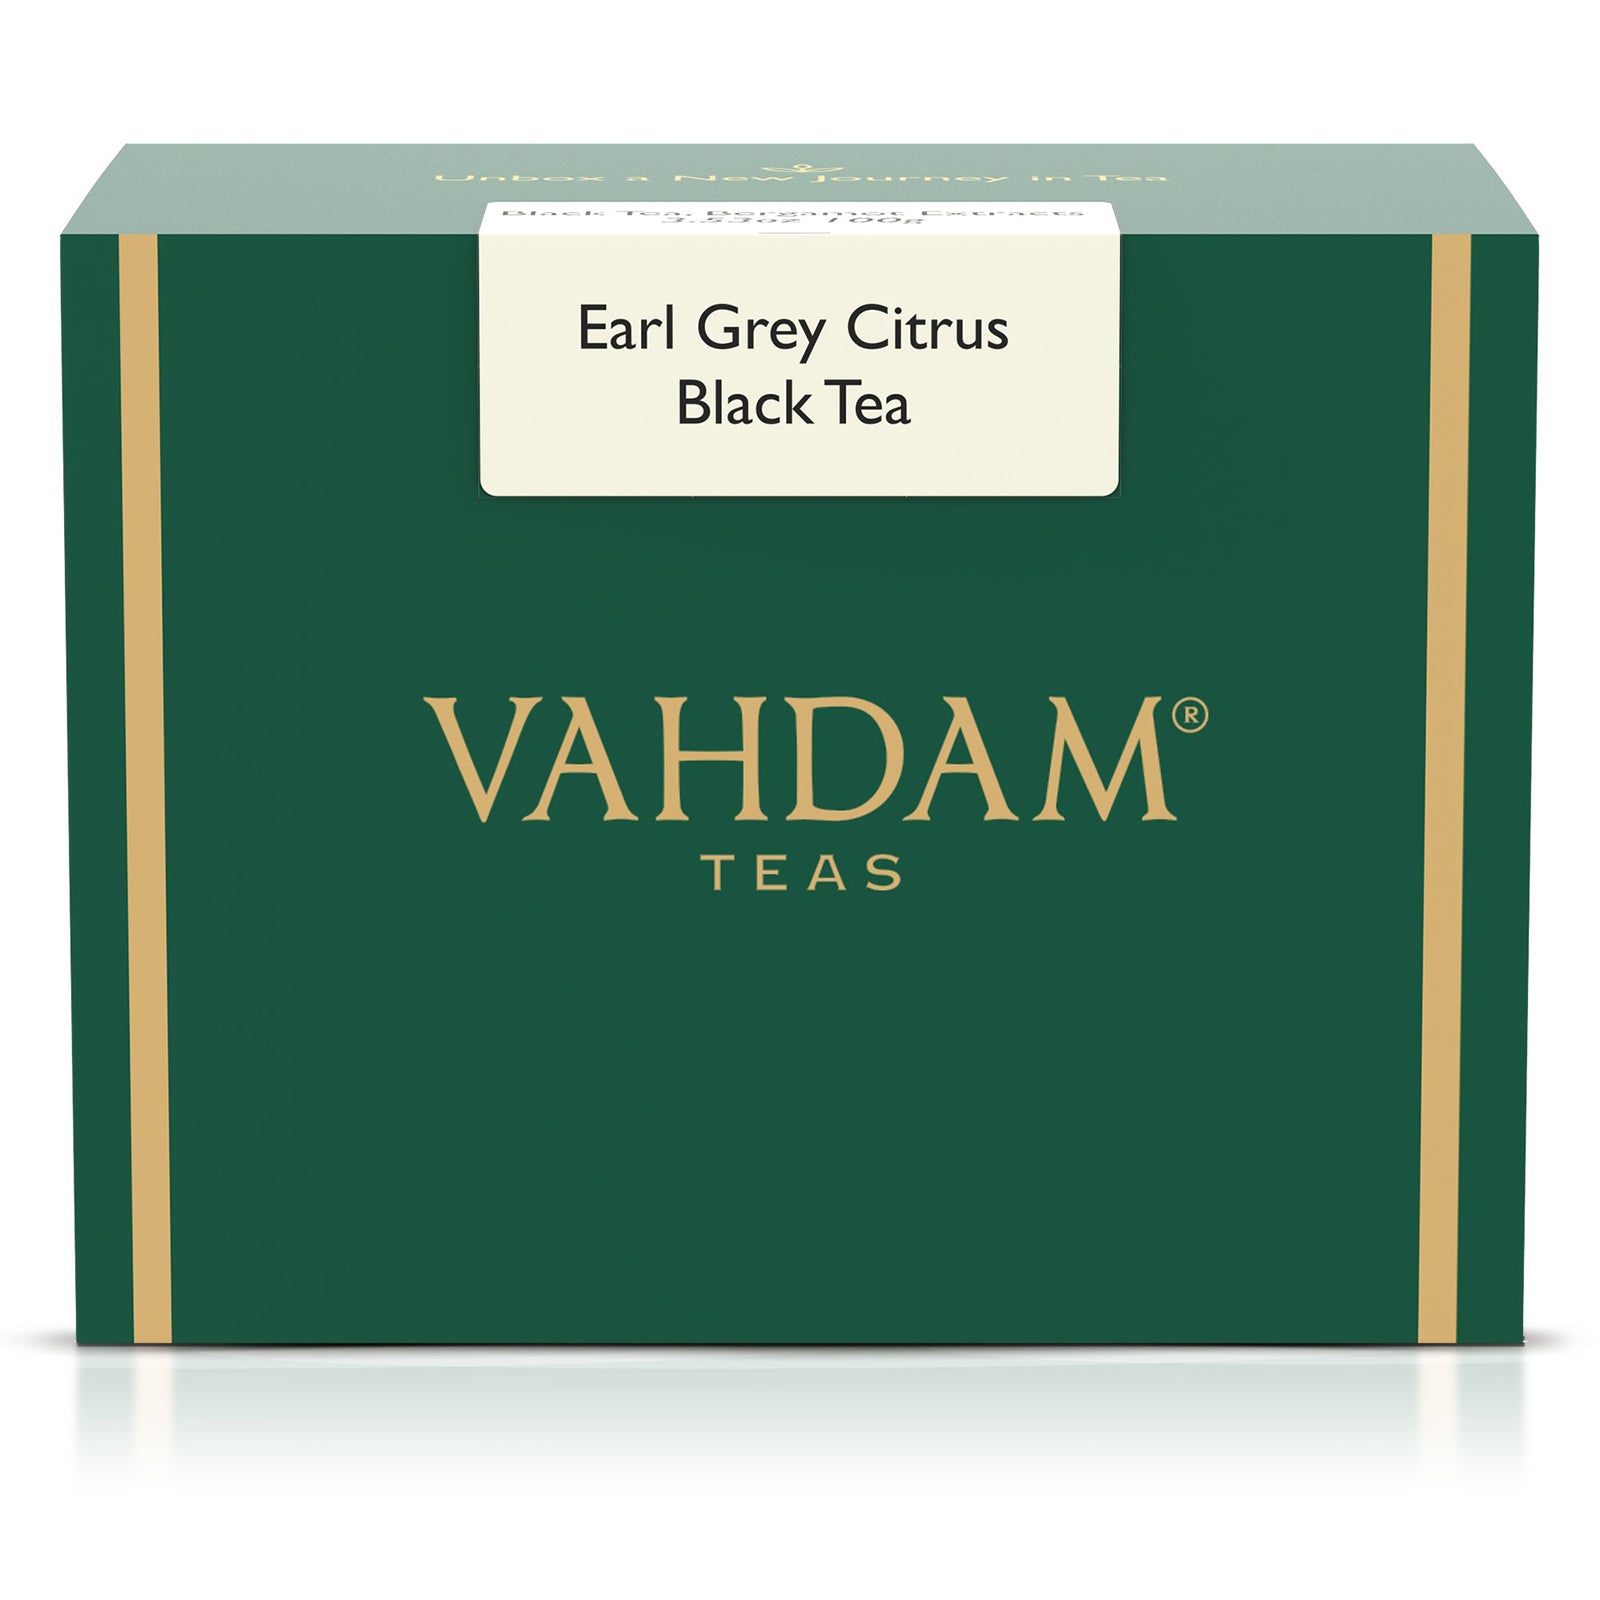 Vahdam Teas, Black Tea, Earl Grey Citrus, 16 oz (454 g)